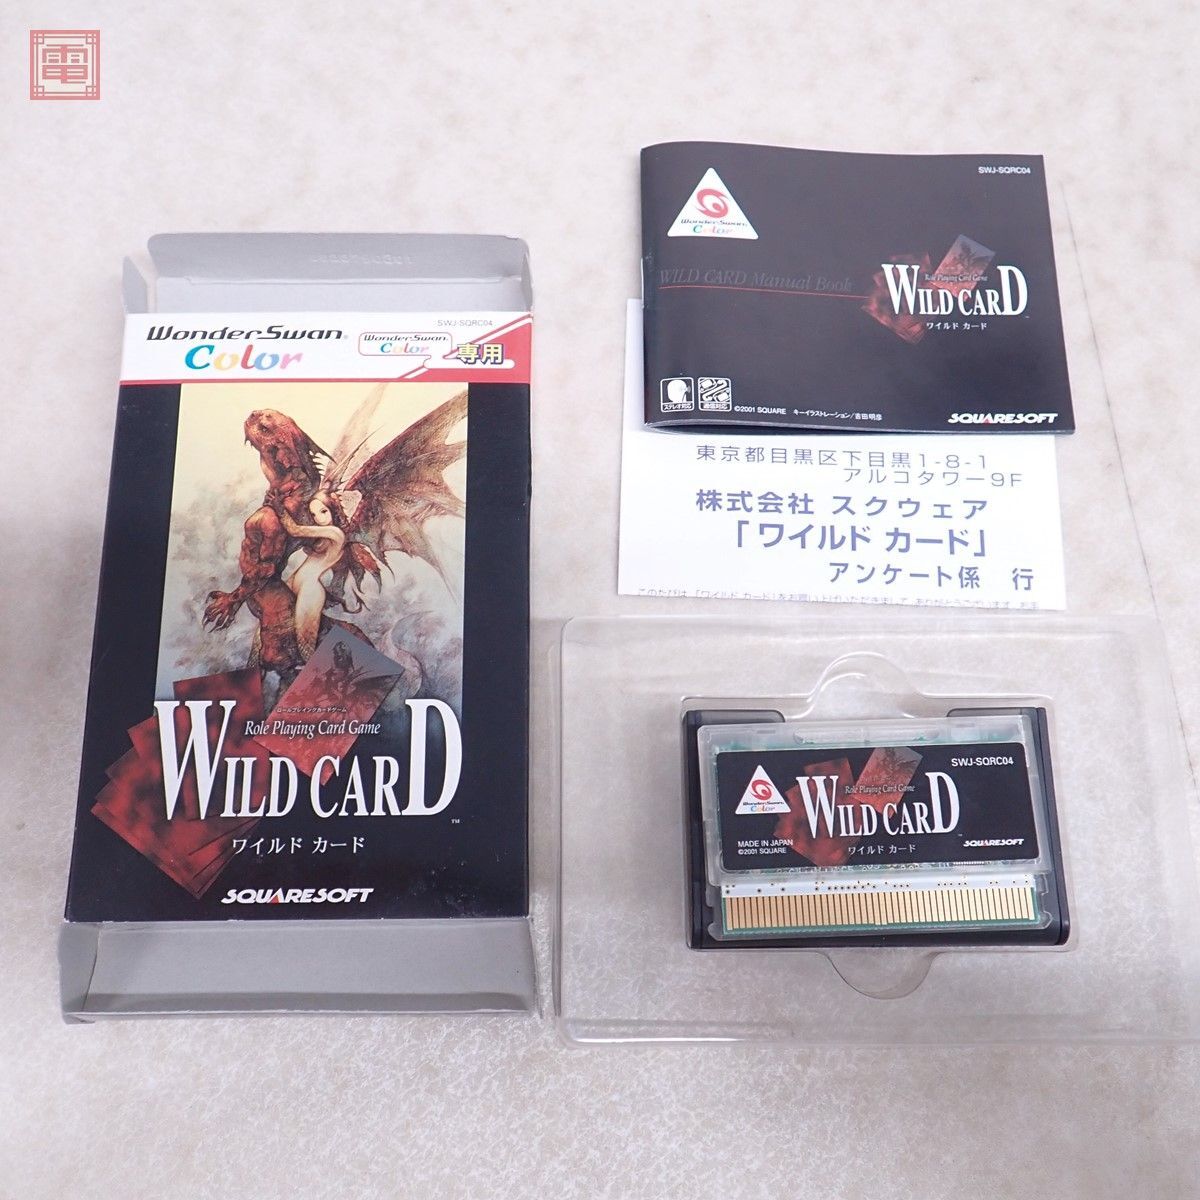  operation guarantee goods WSC WonderSwan color wild card WILD CARDsk wear SQUARESOFT box opinion post card attaching [10